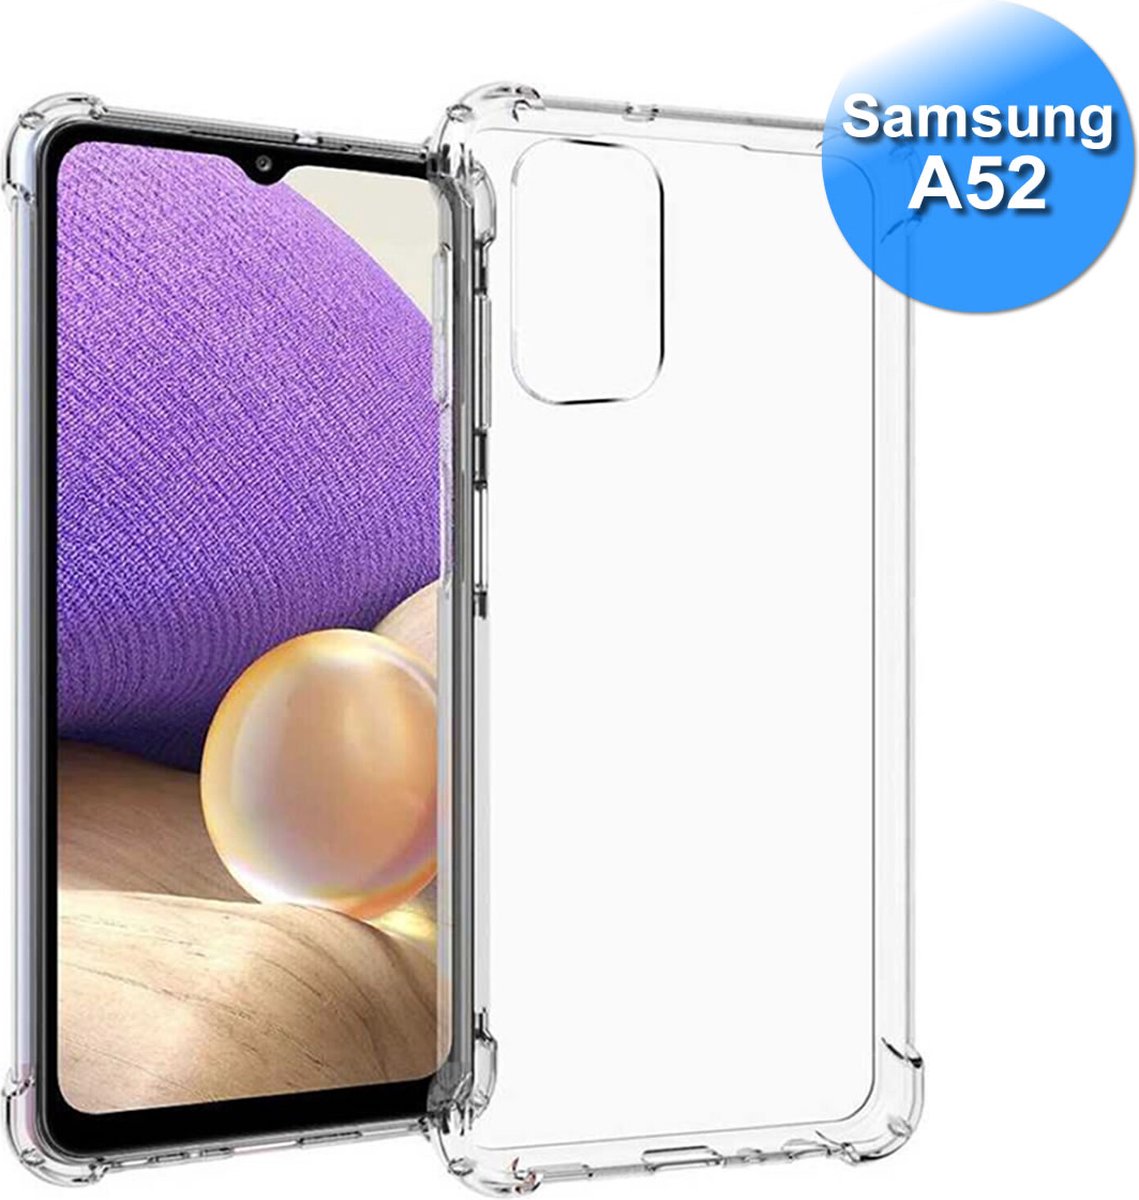 Telefoonhoesje geschikt voor de Samsung A52 - Anti Shock hoesje - Hard Back Cover - Transparant